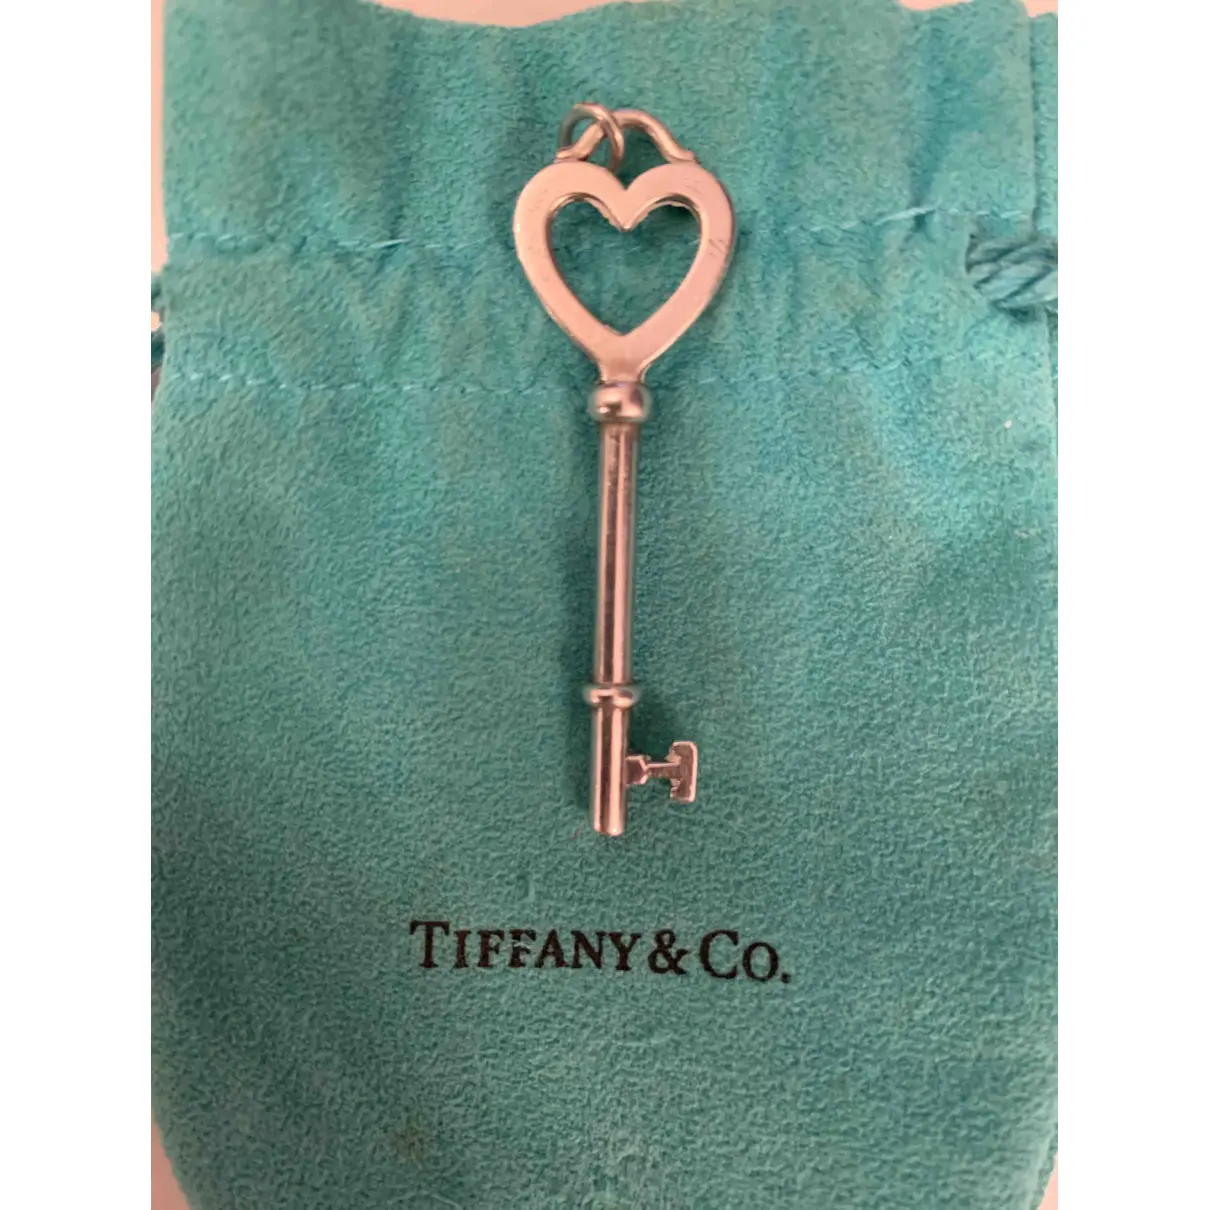 Buy Tiffany & Co Silver pendant online